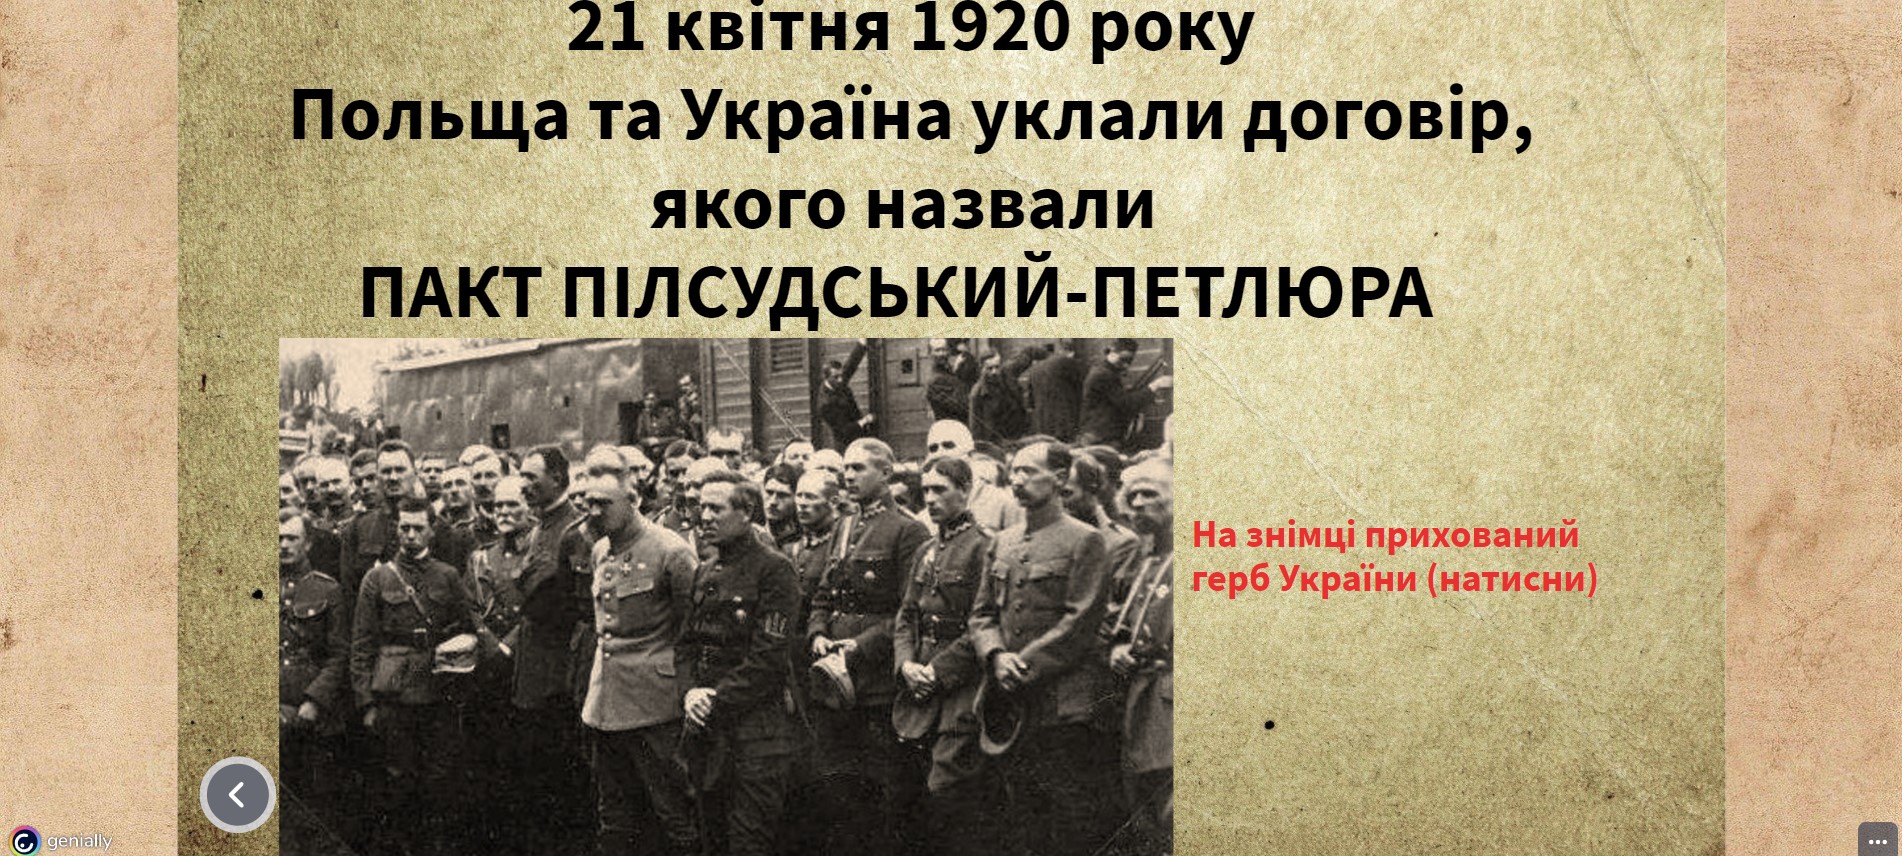 Polsko-ukraińska gra edukacyjna on-line „Pakt Piłsudski-Petlura 1920”